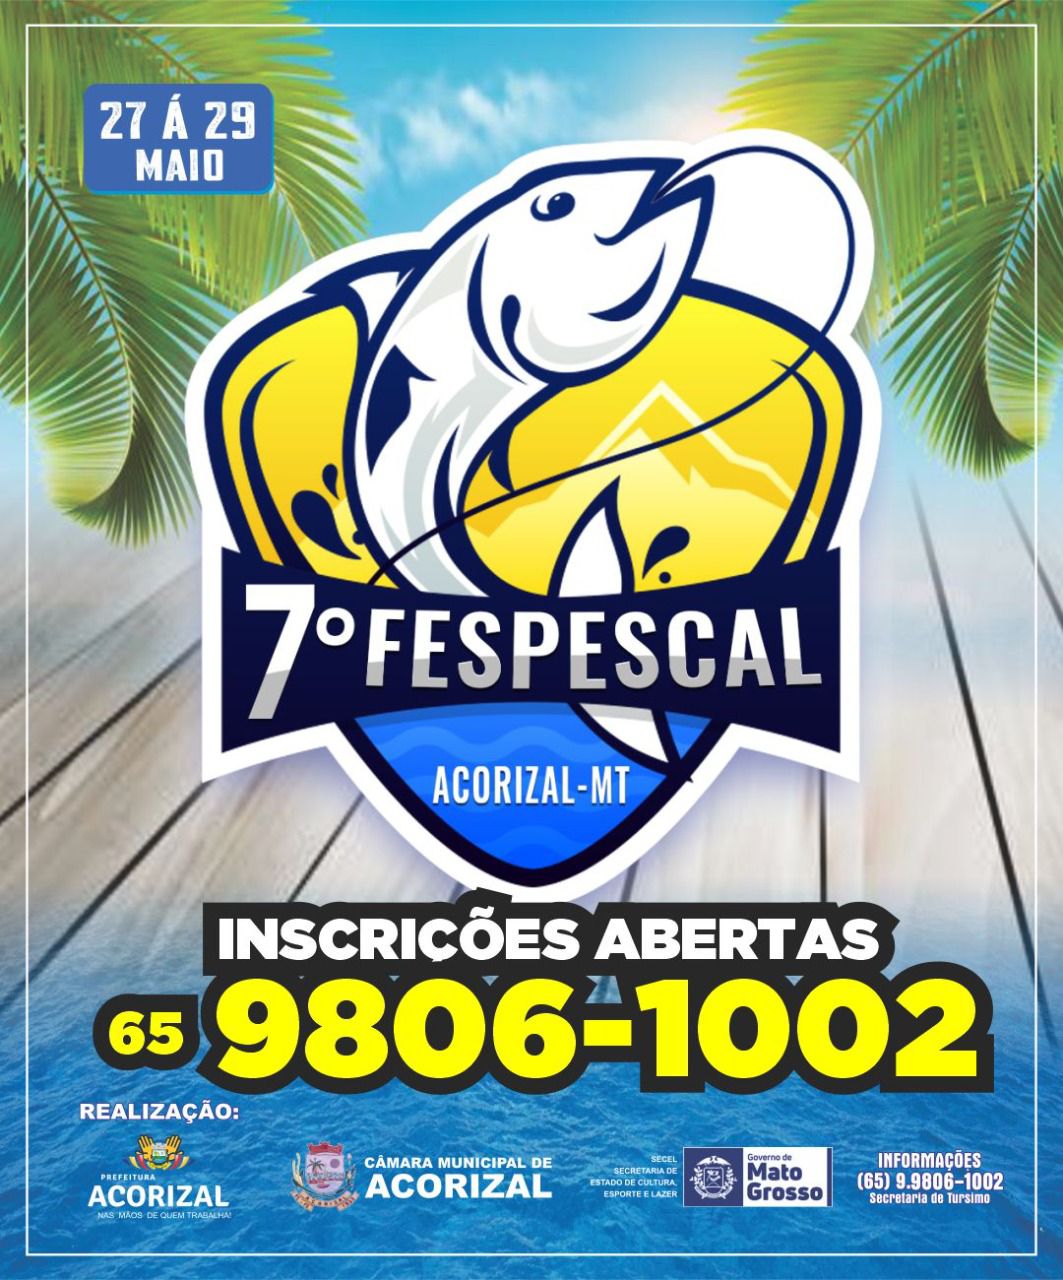 7º FESPESCAL - Festival de Pesca de Acorizal